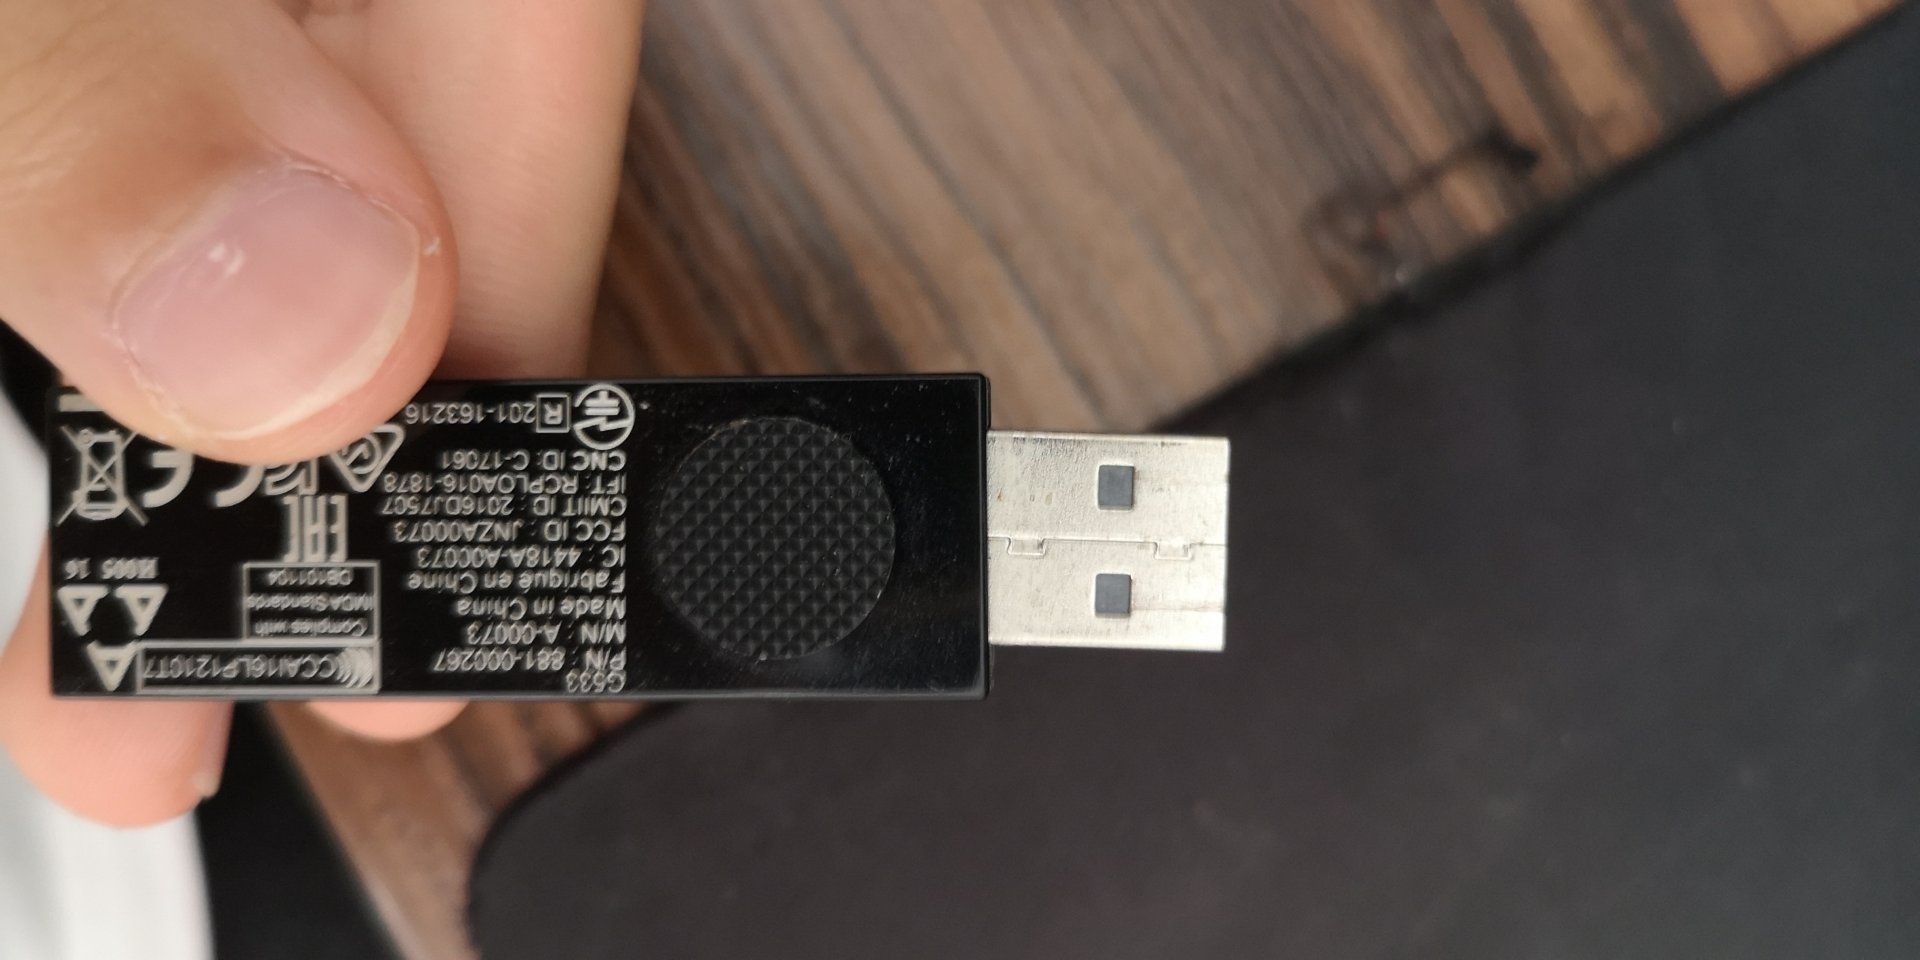 Yamulan Logitech G533 USB Receiver nasıl düzeltilir? | Technopat Sosyal